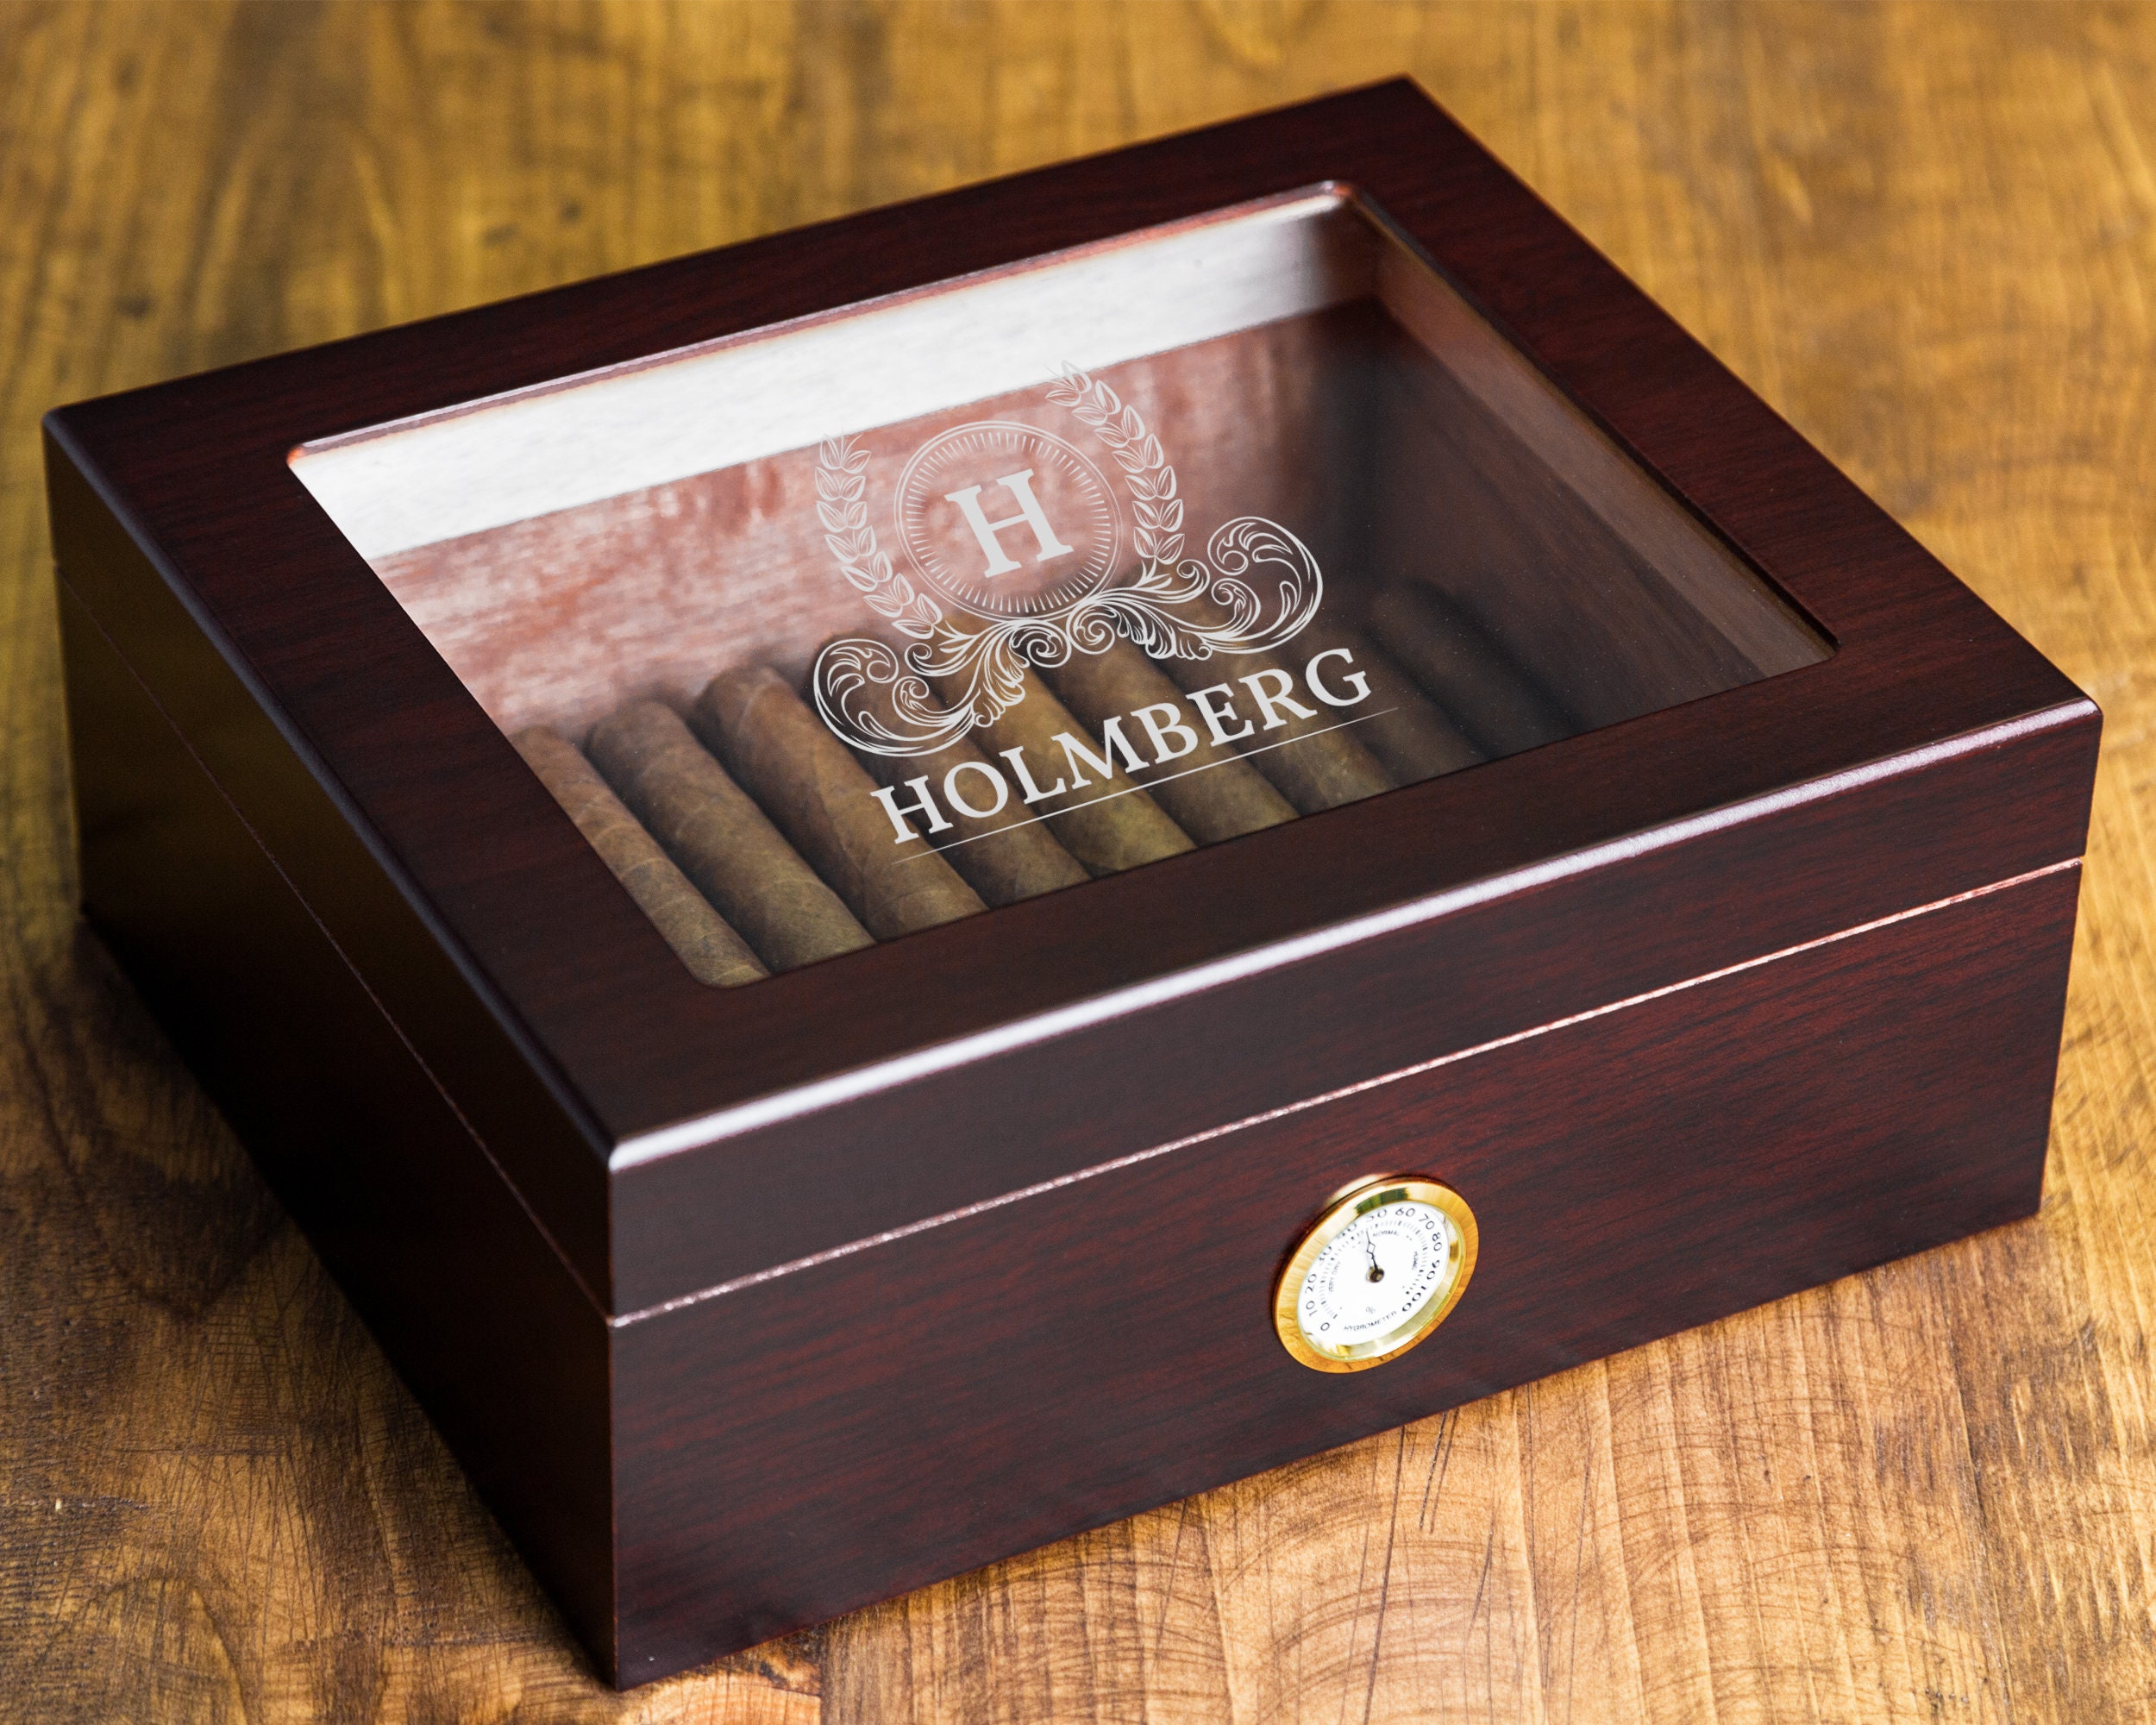 8x10 Large Wood Memory Box Engraved Walnut Box for 